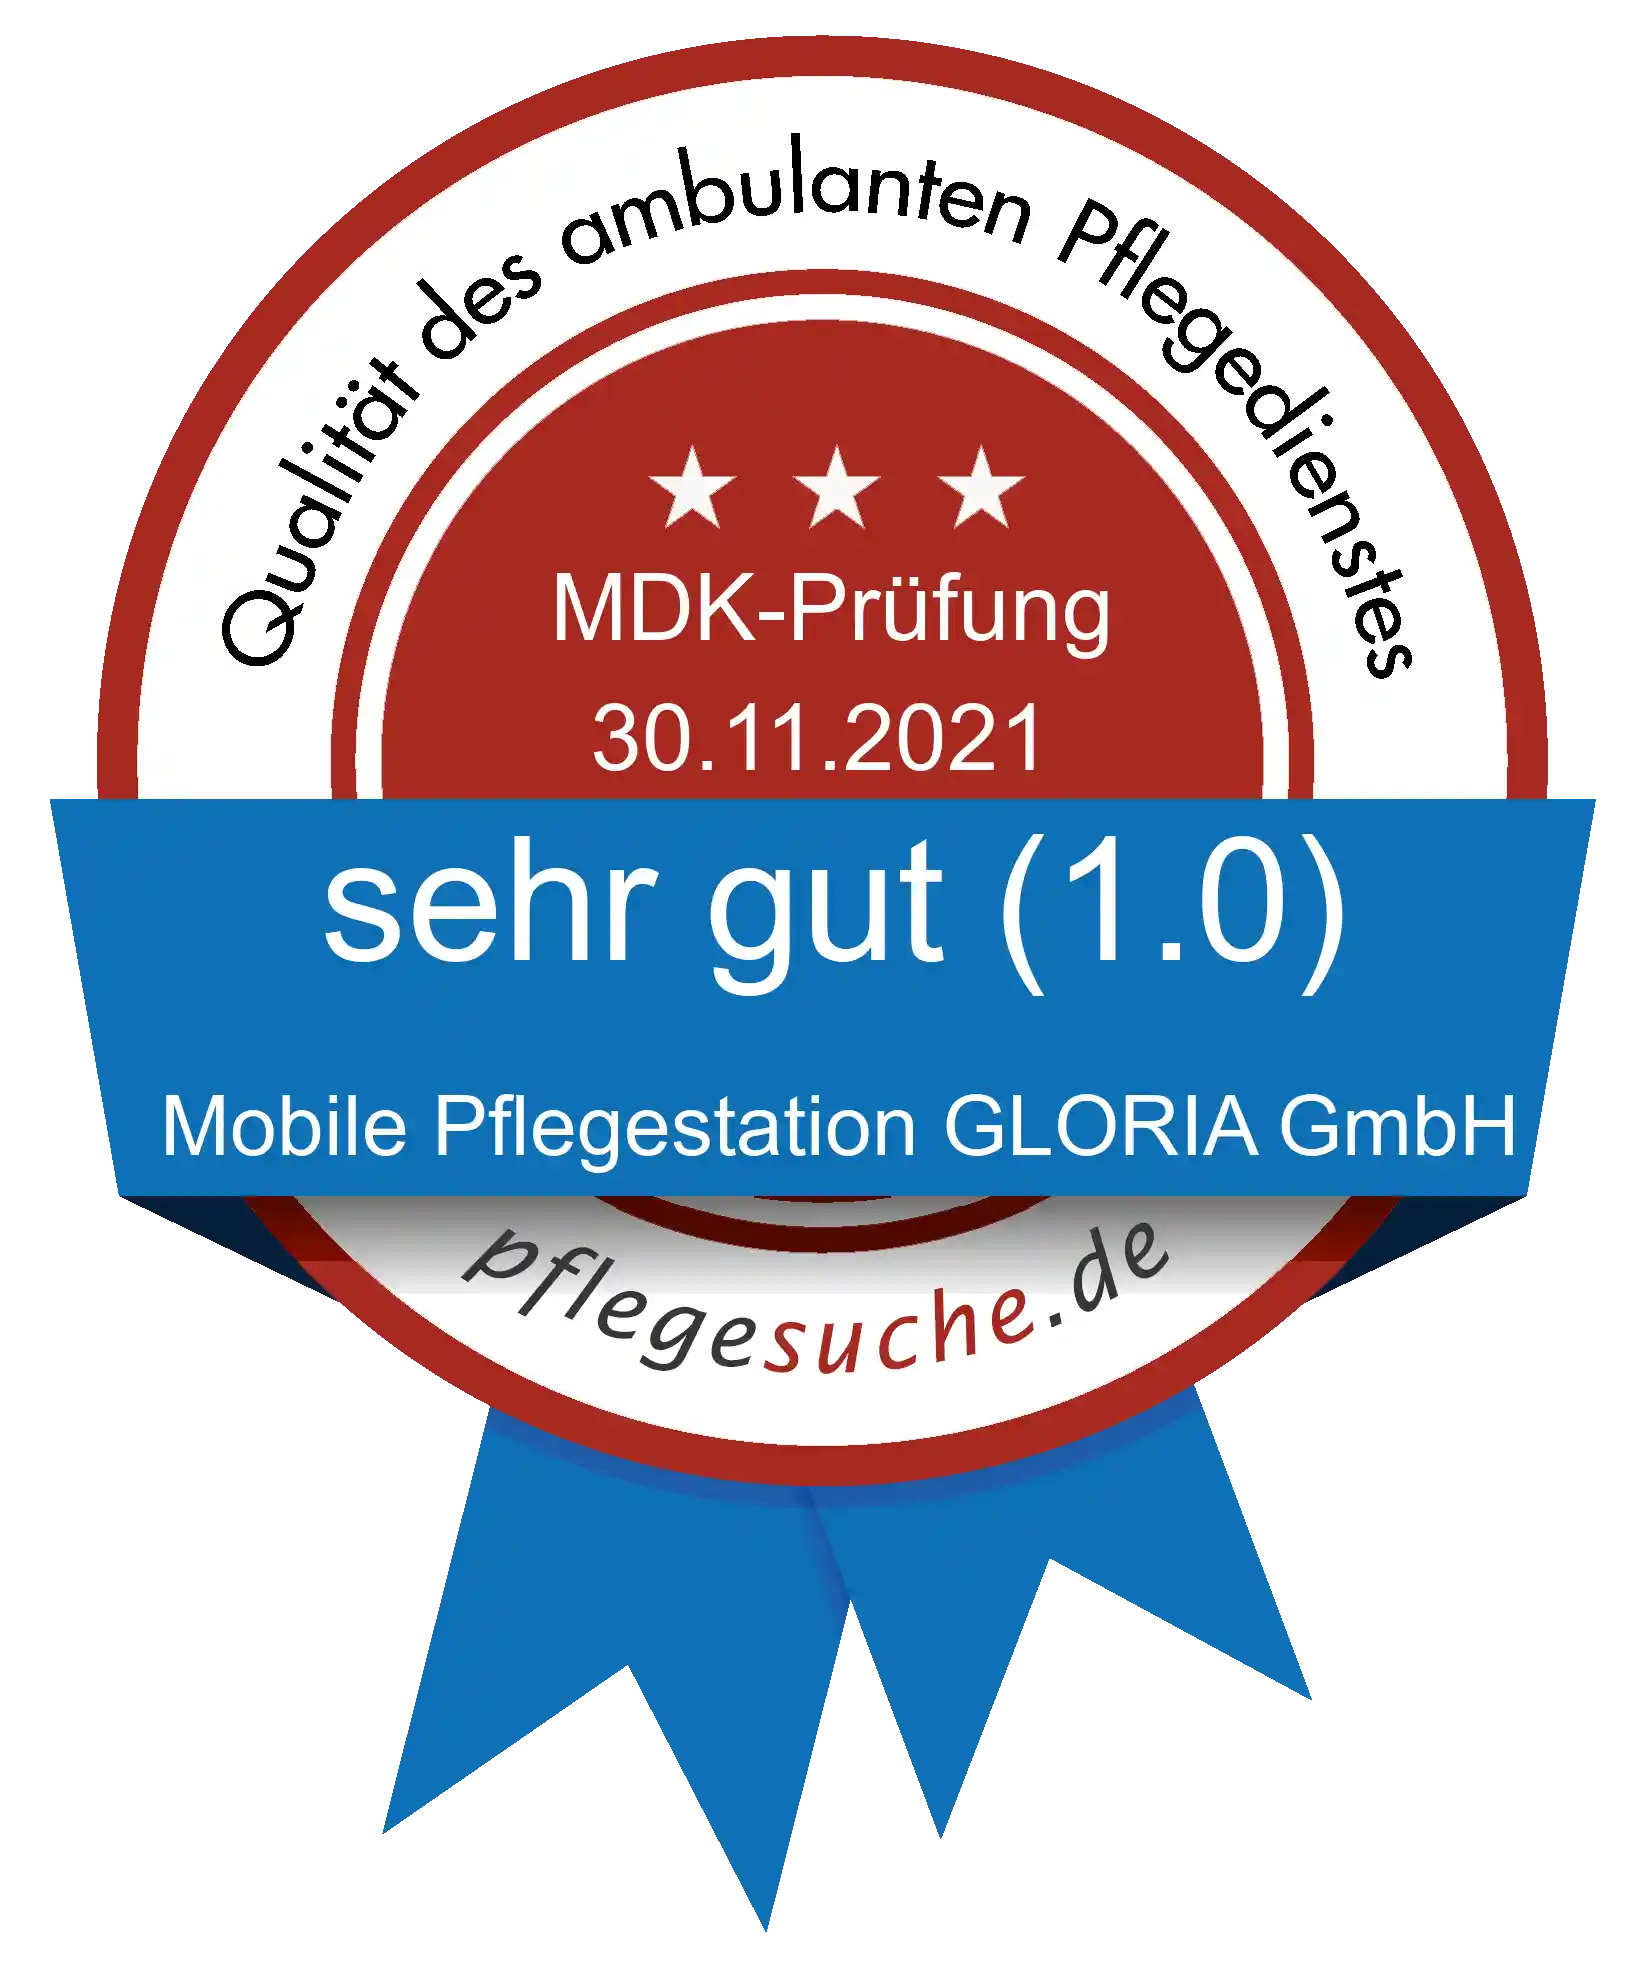 Siegel Benotung: Mobile Pflegestation GLORIA GmbH